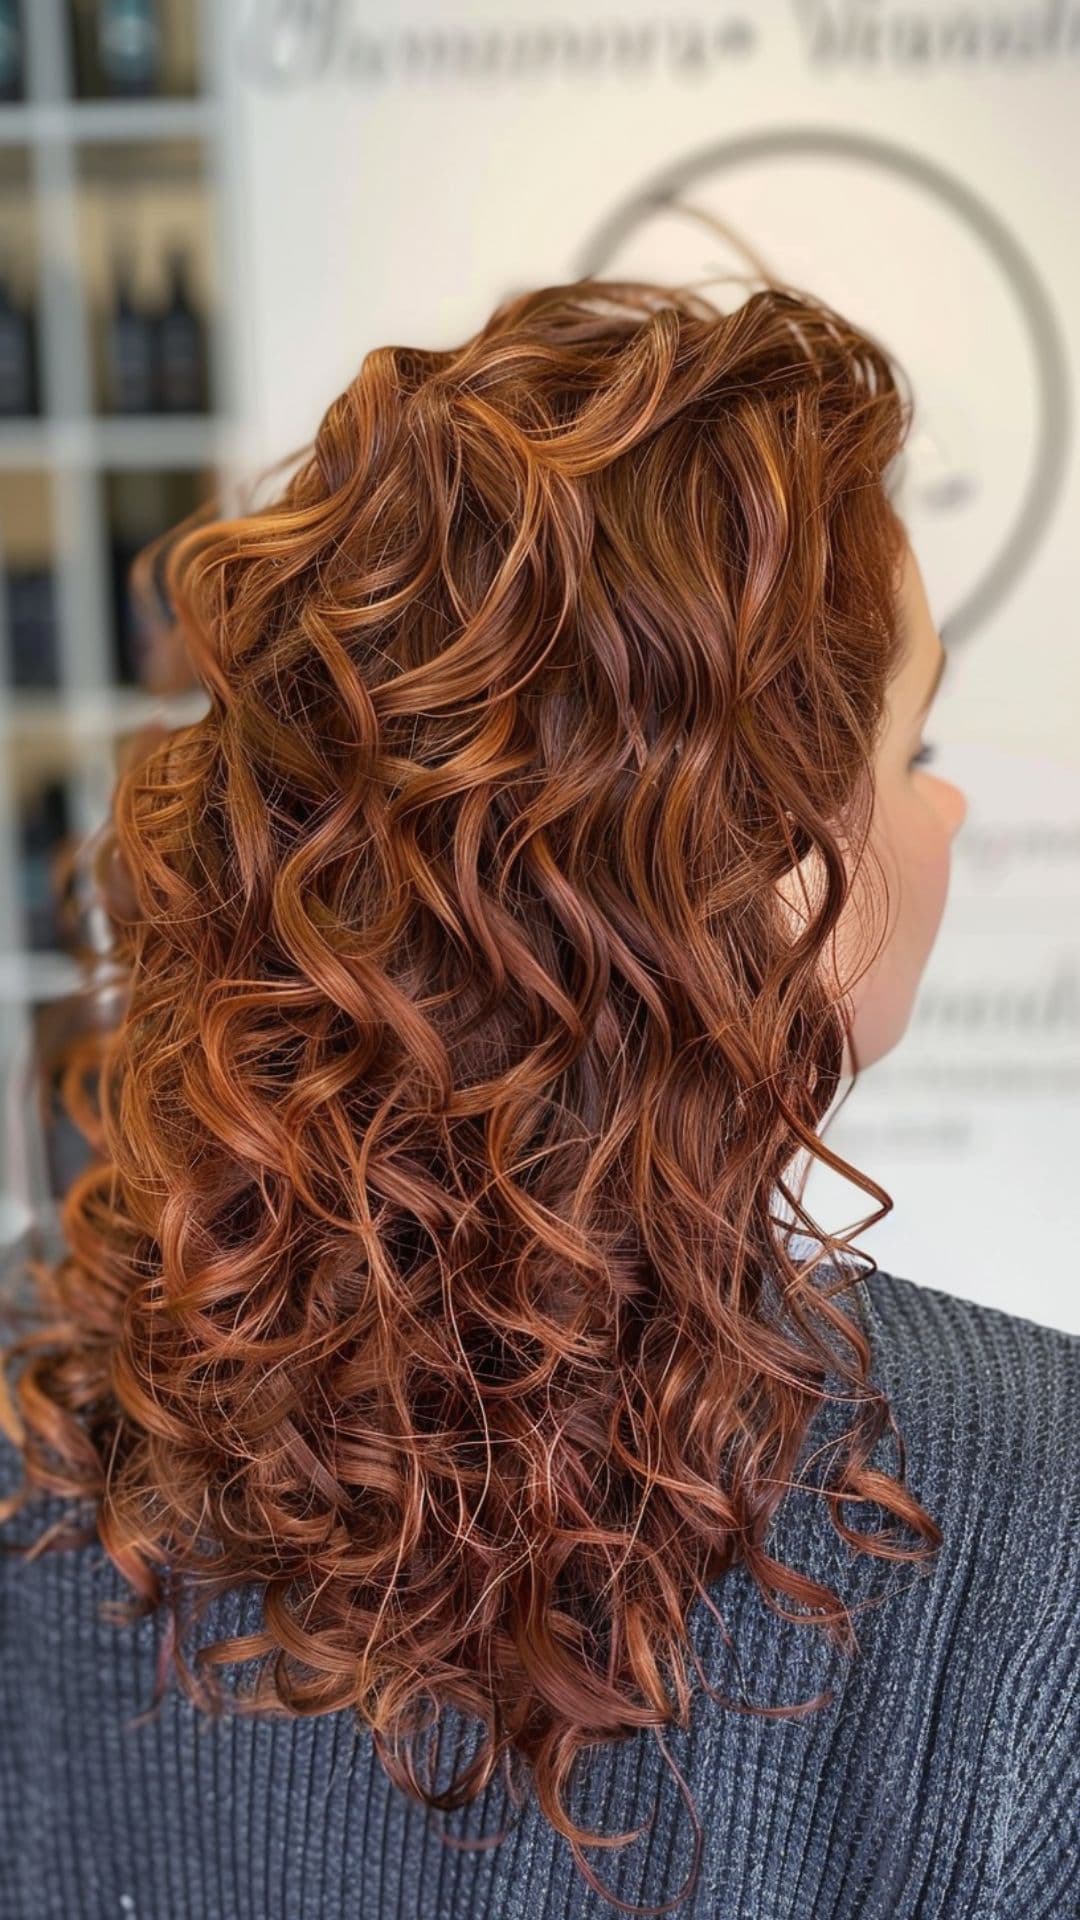 A woman modelling a mahogany curly hair.